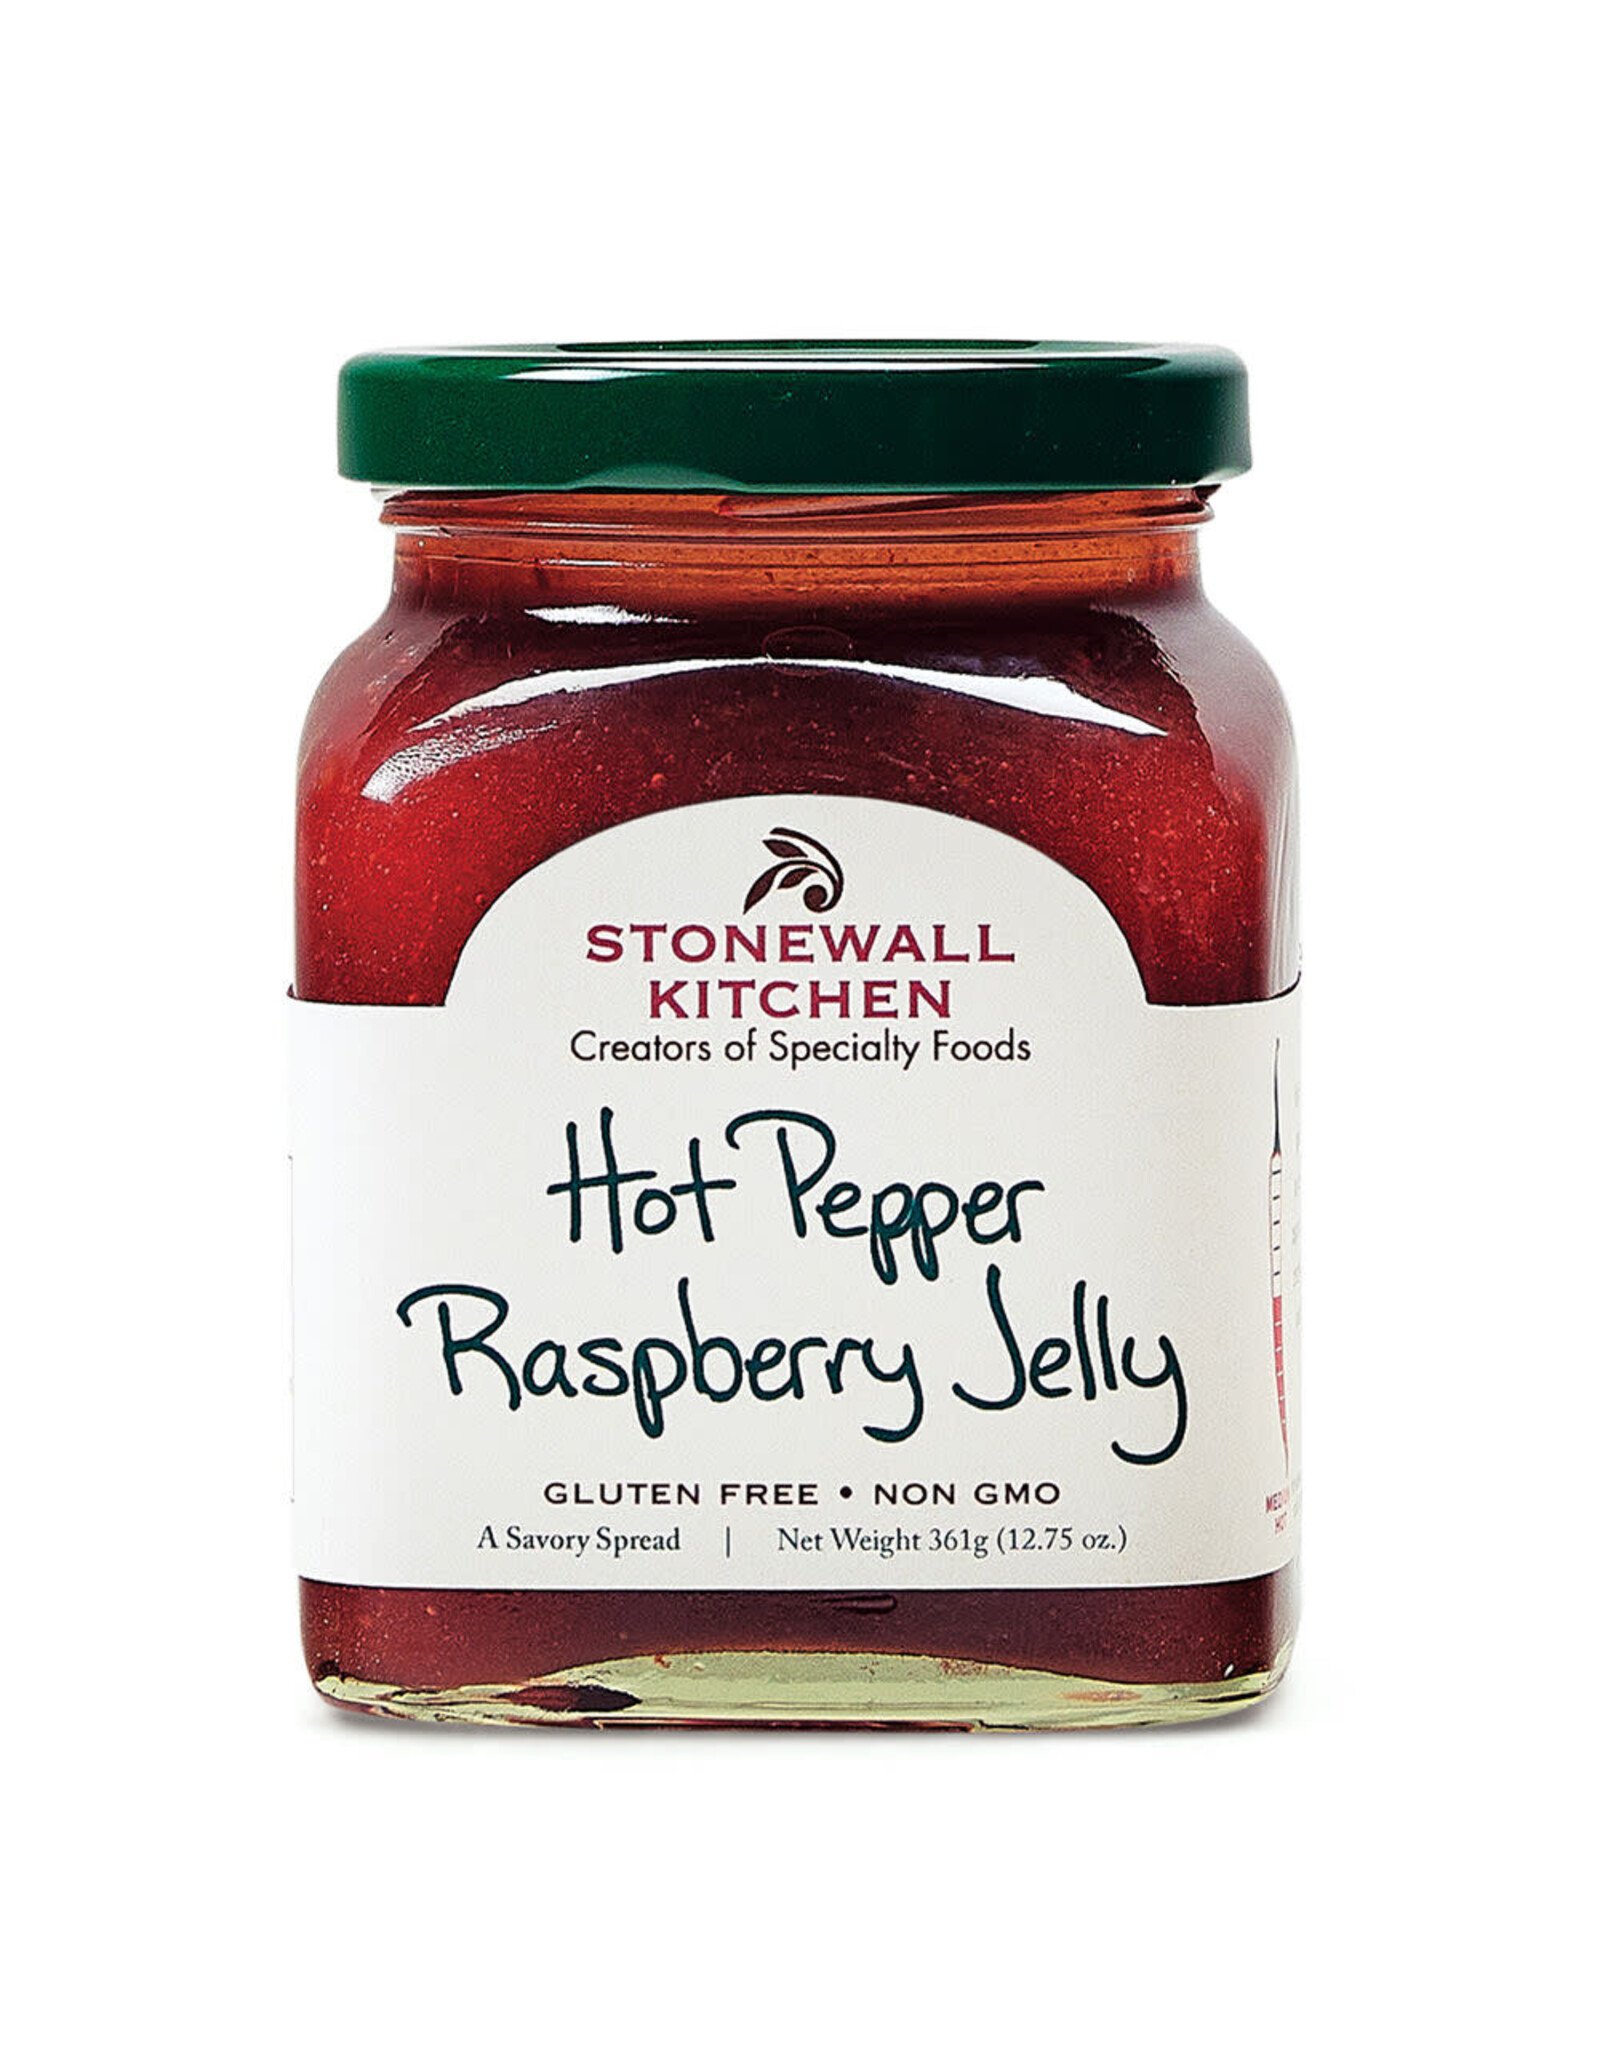 Stonewall Kitchen Hot Pepper Raspberry Jelly